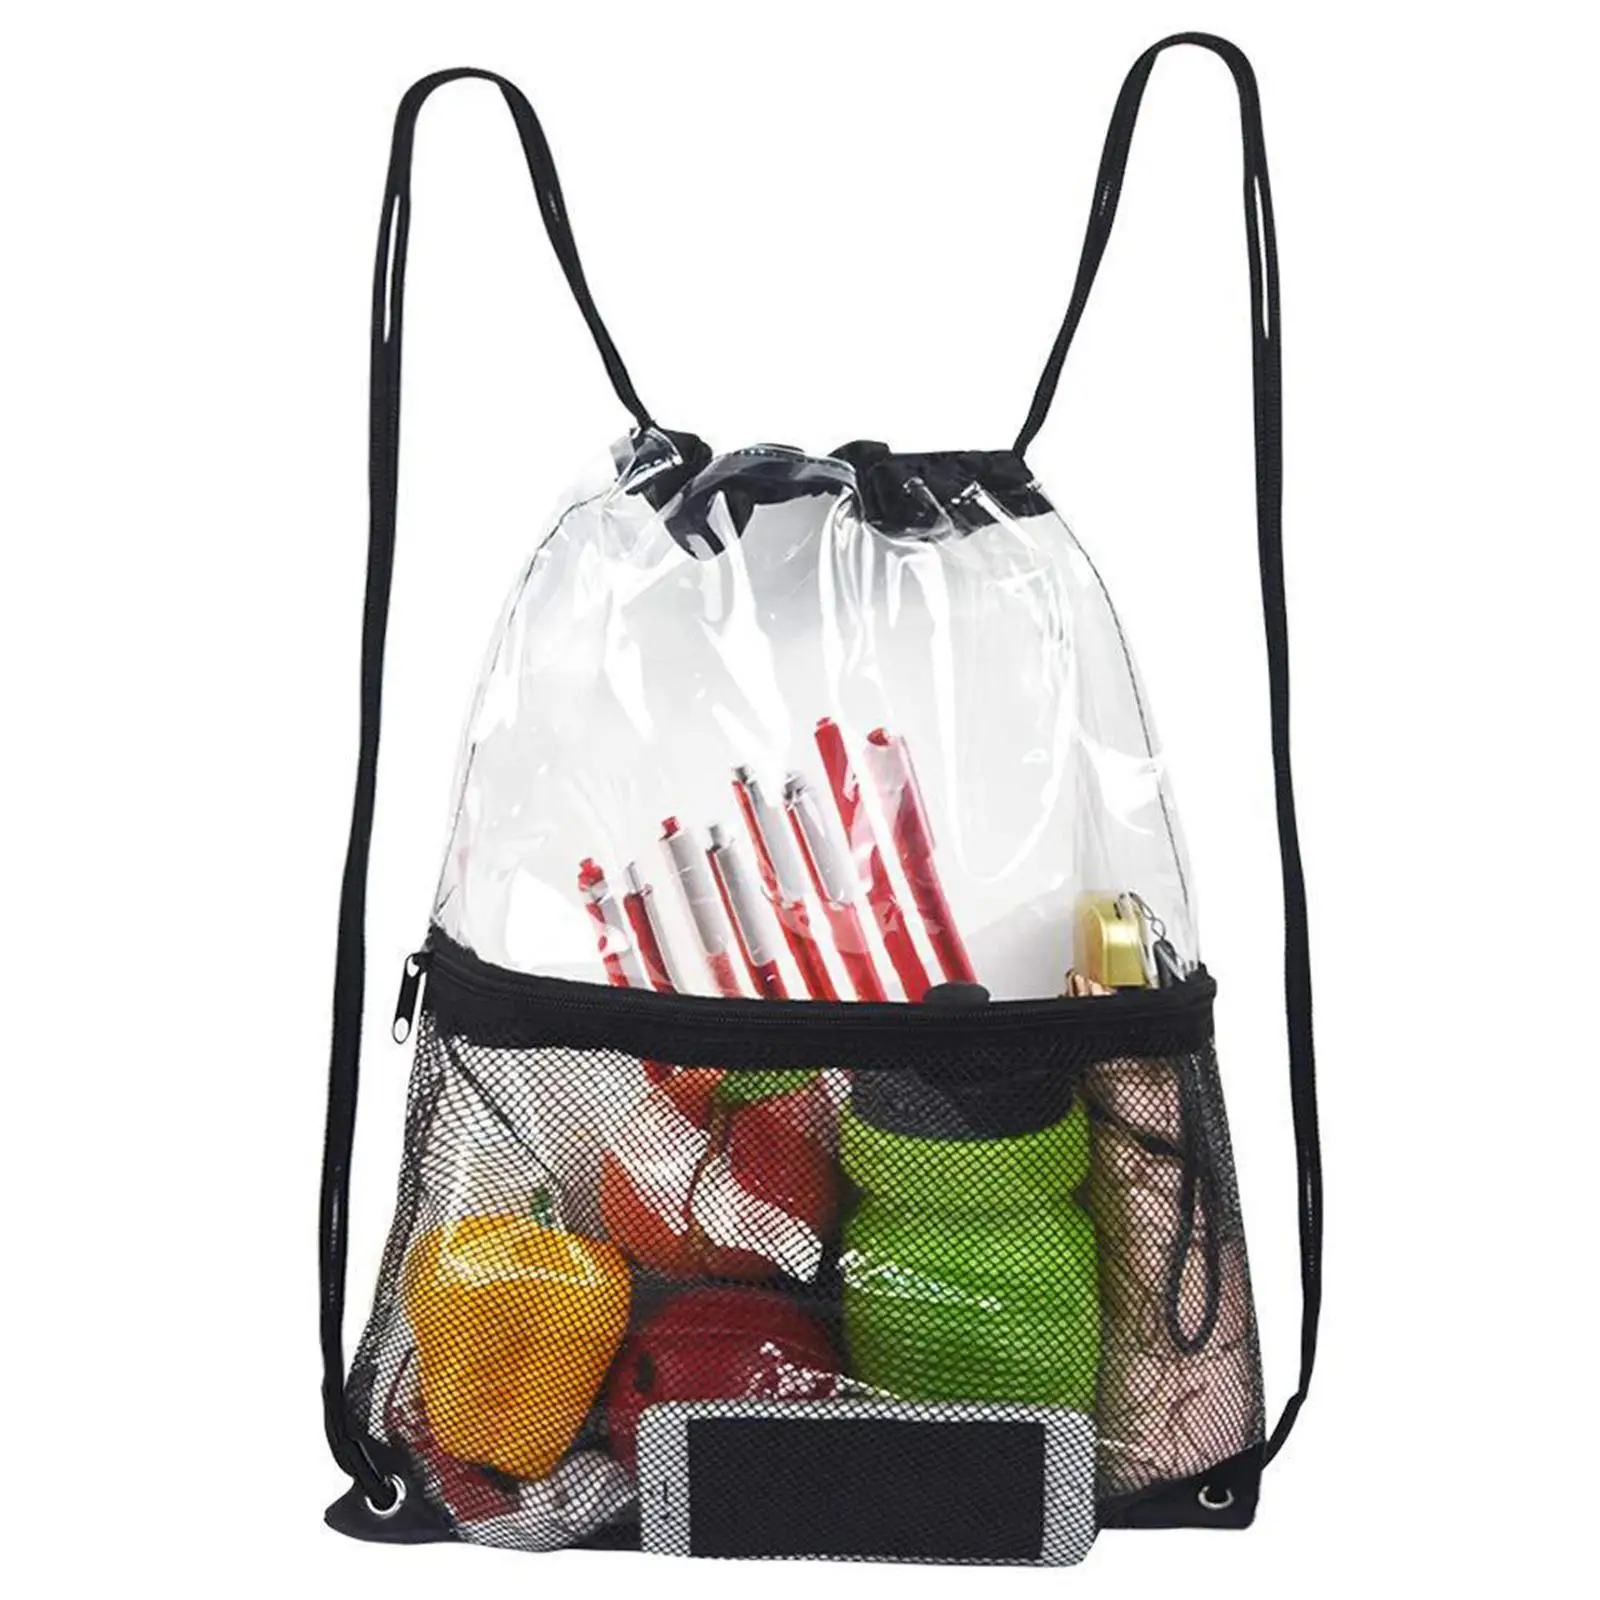 Clear Drawstring Backbag Waterproof Lightweight Portable Clear Bag Gym Sports Sackpacks for Yoga Sports Travel Gym Men Women